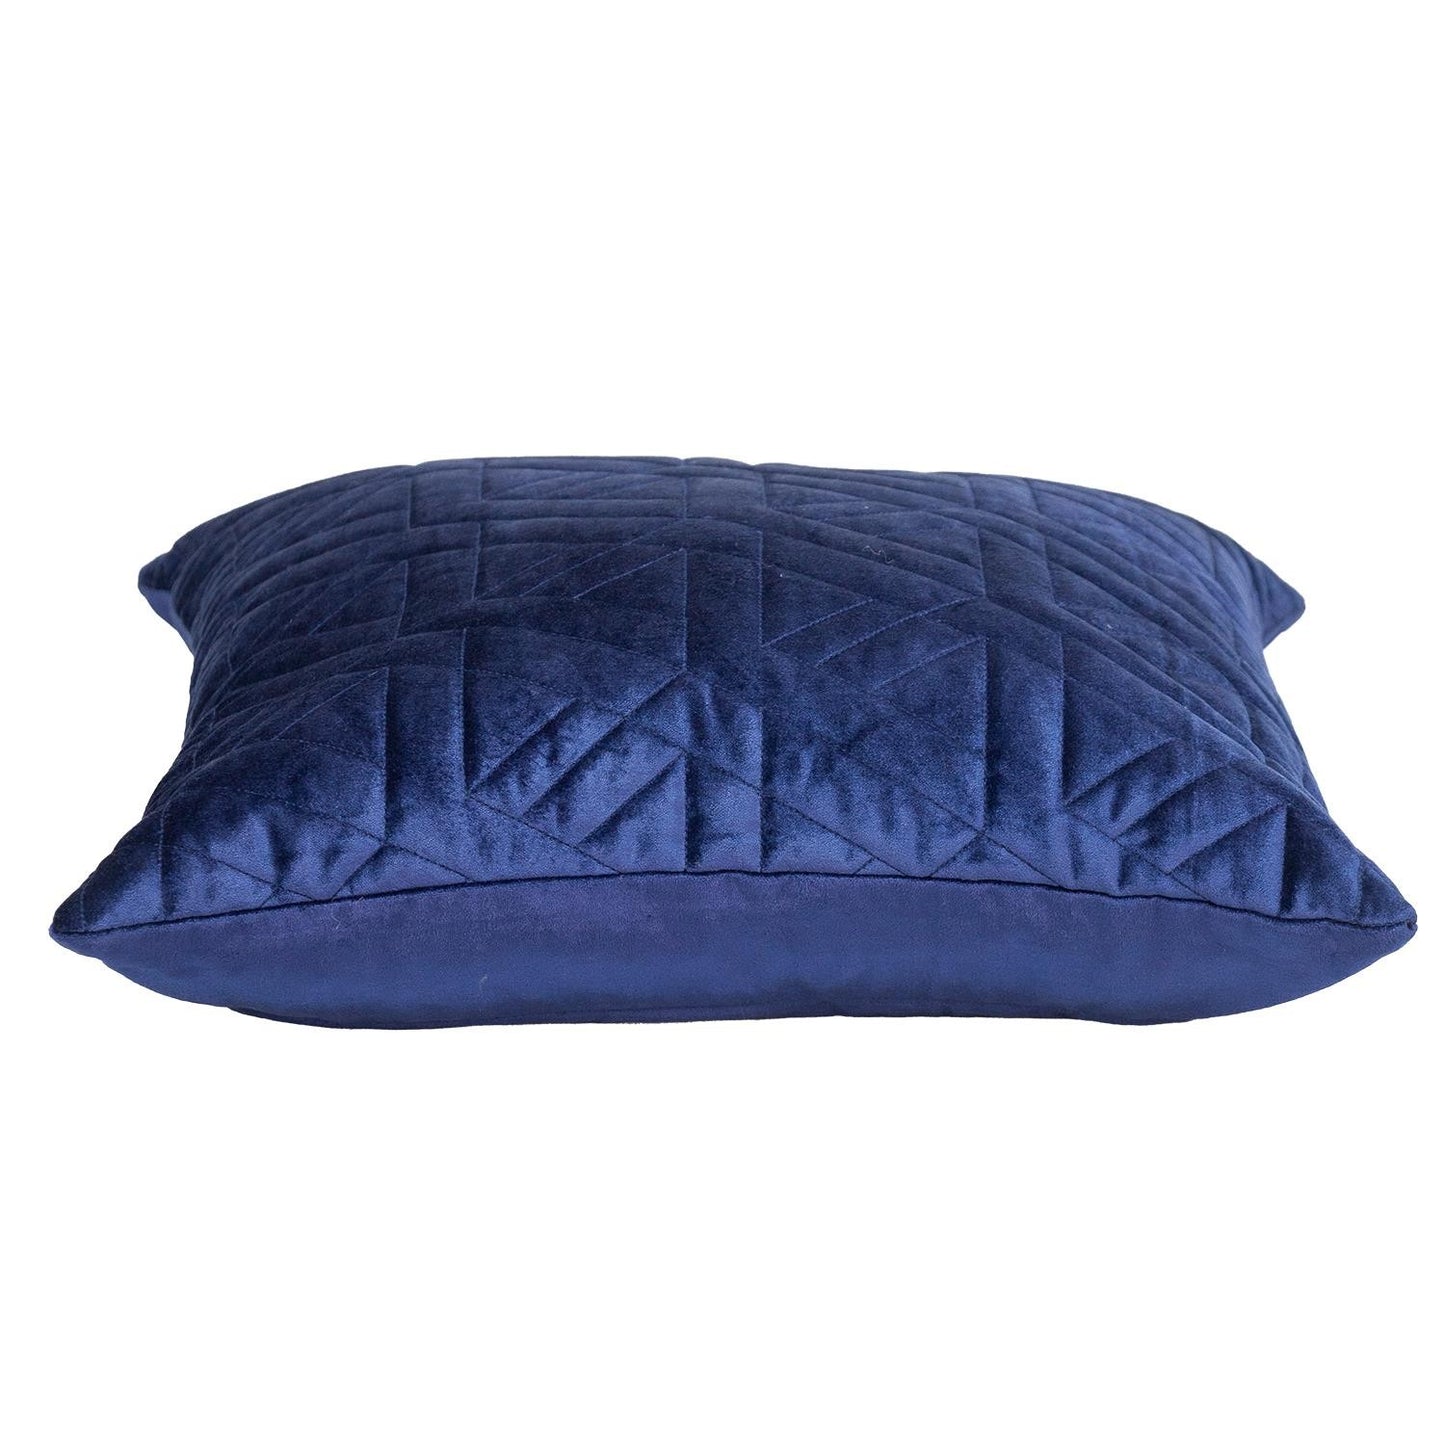 Blue Velvet Quilted Throw Pillow